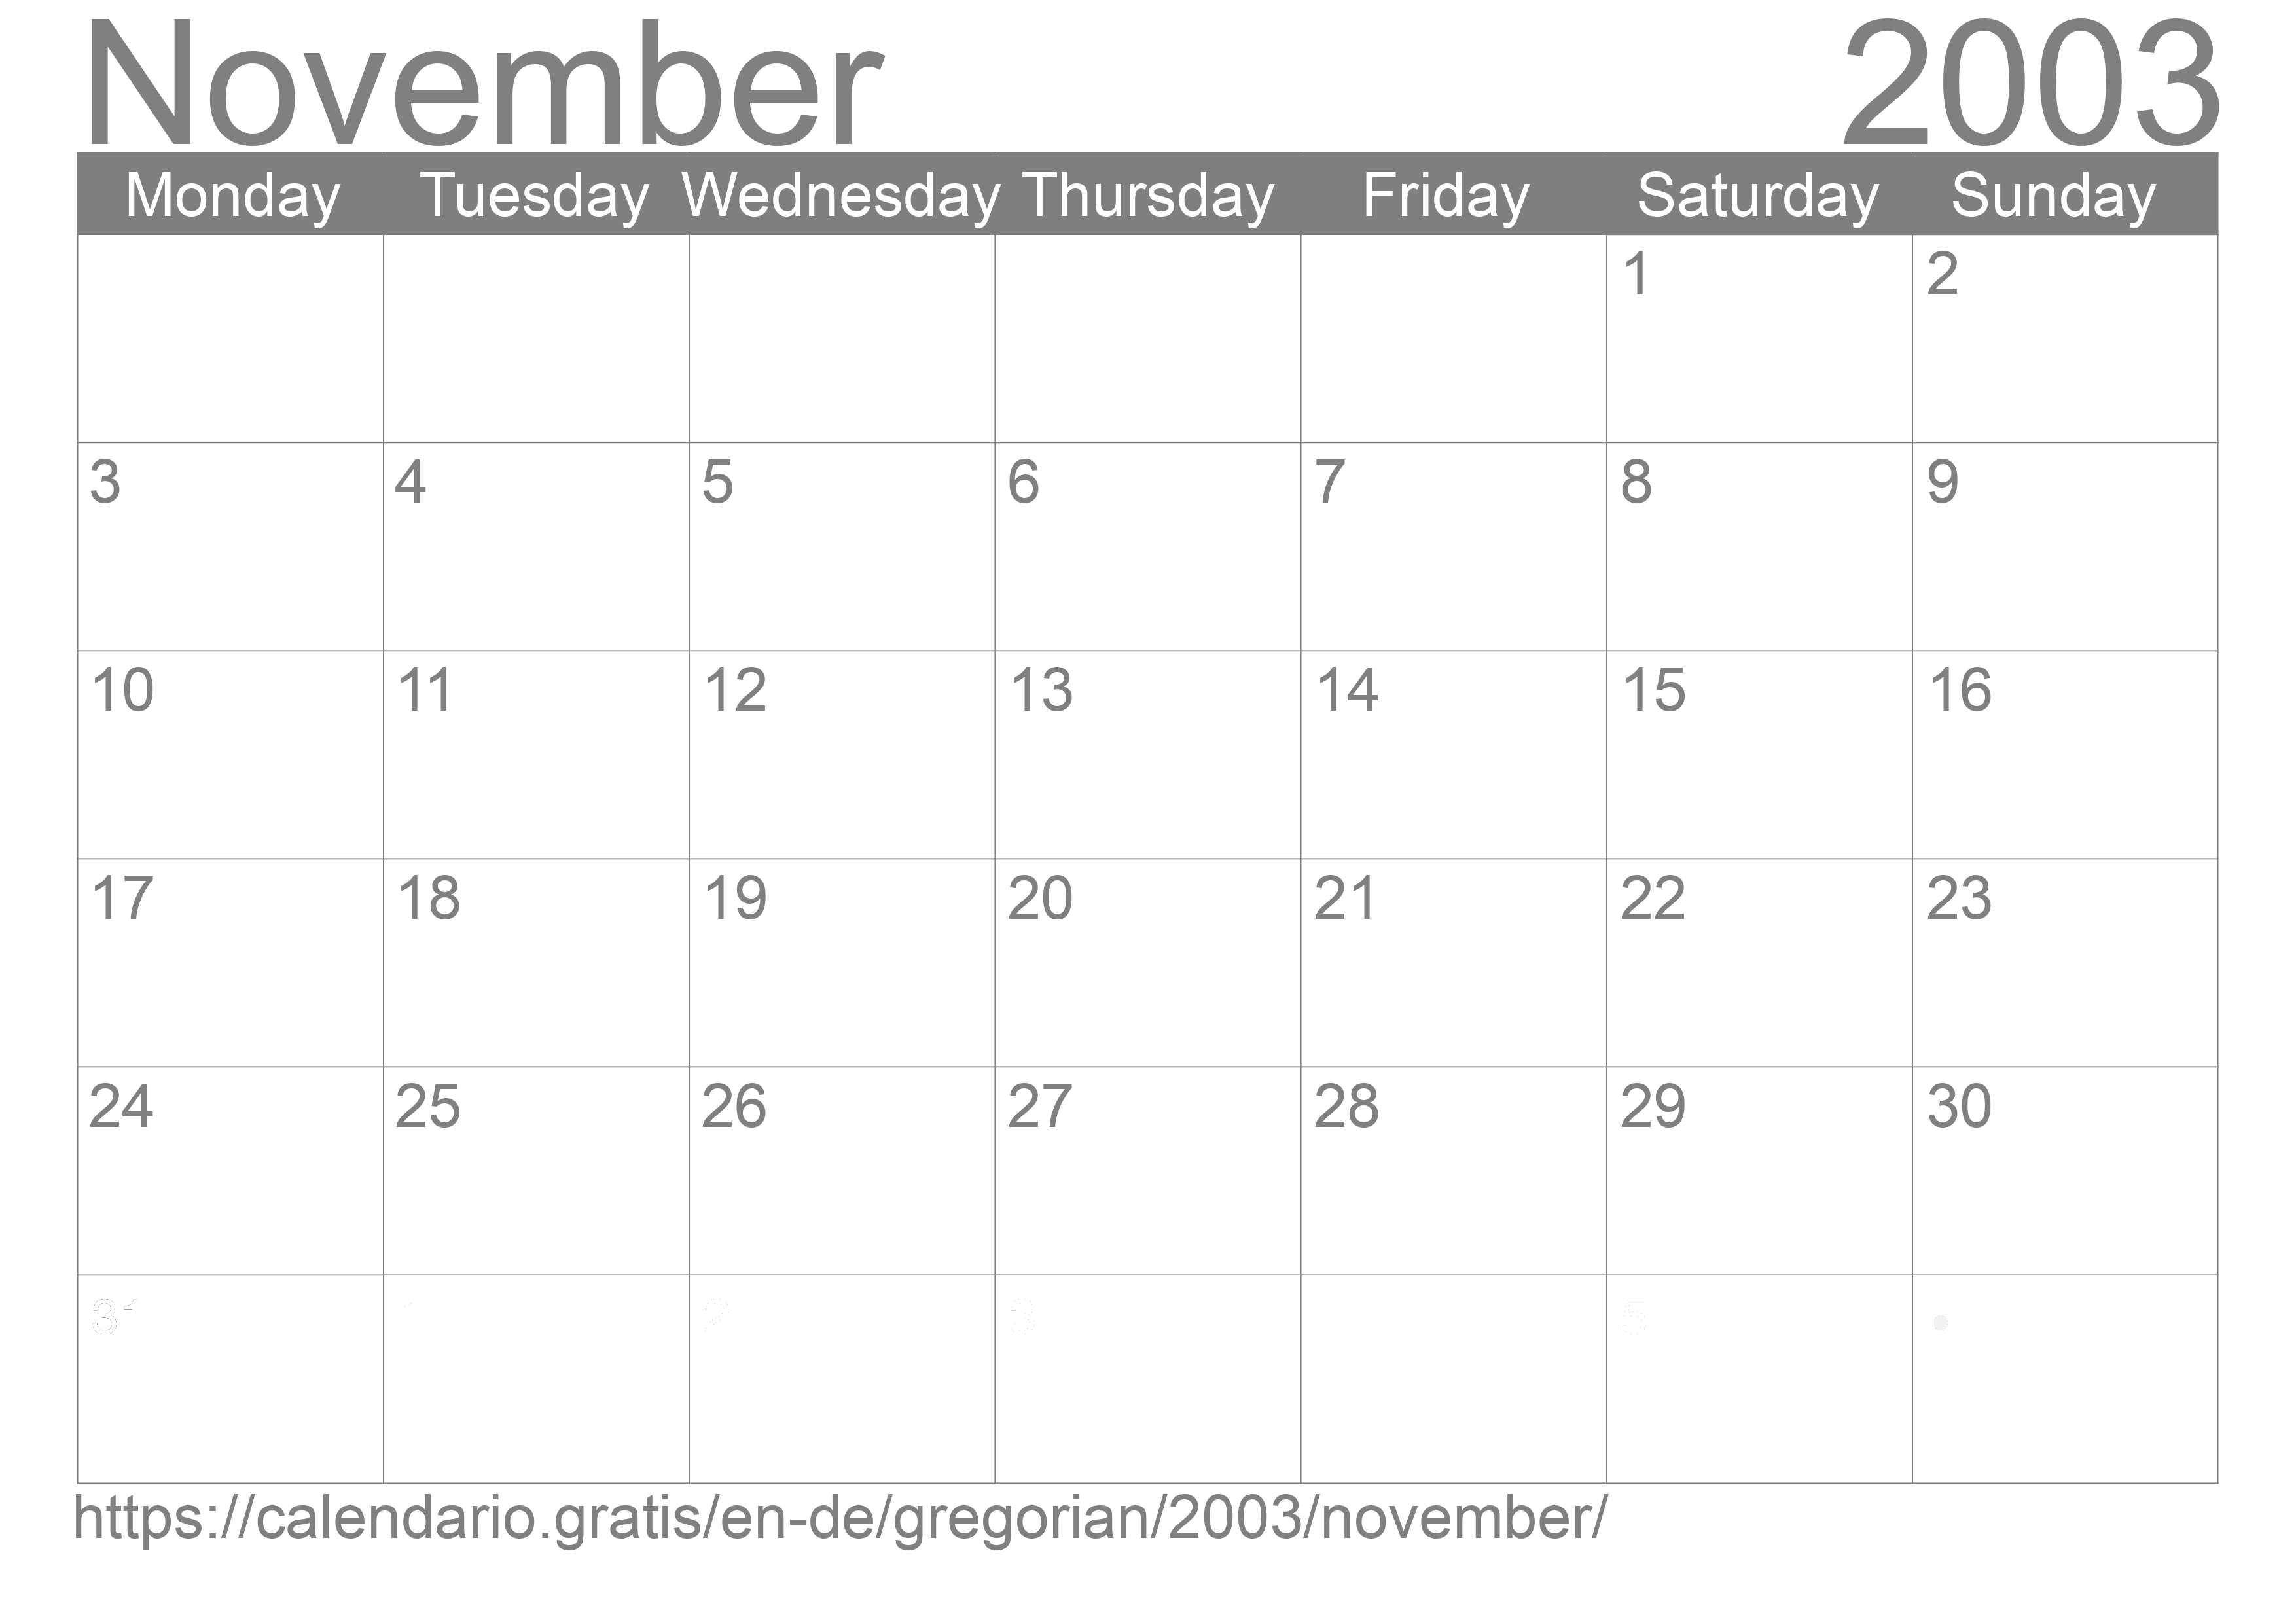 Calendar November 2003 to print